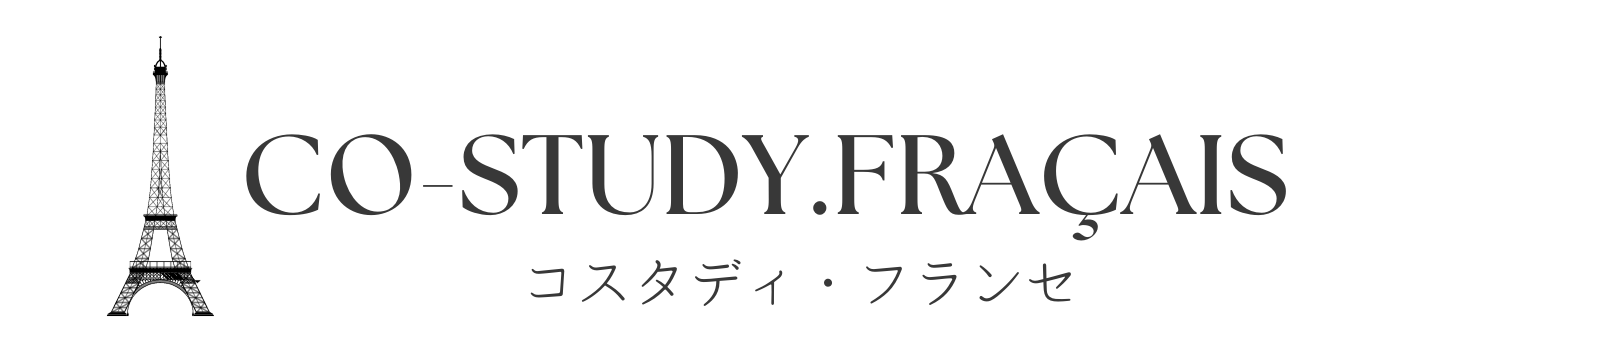 Co-study.français│コスタディ・フランセ